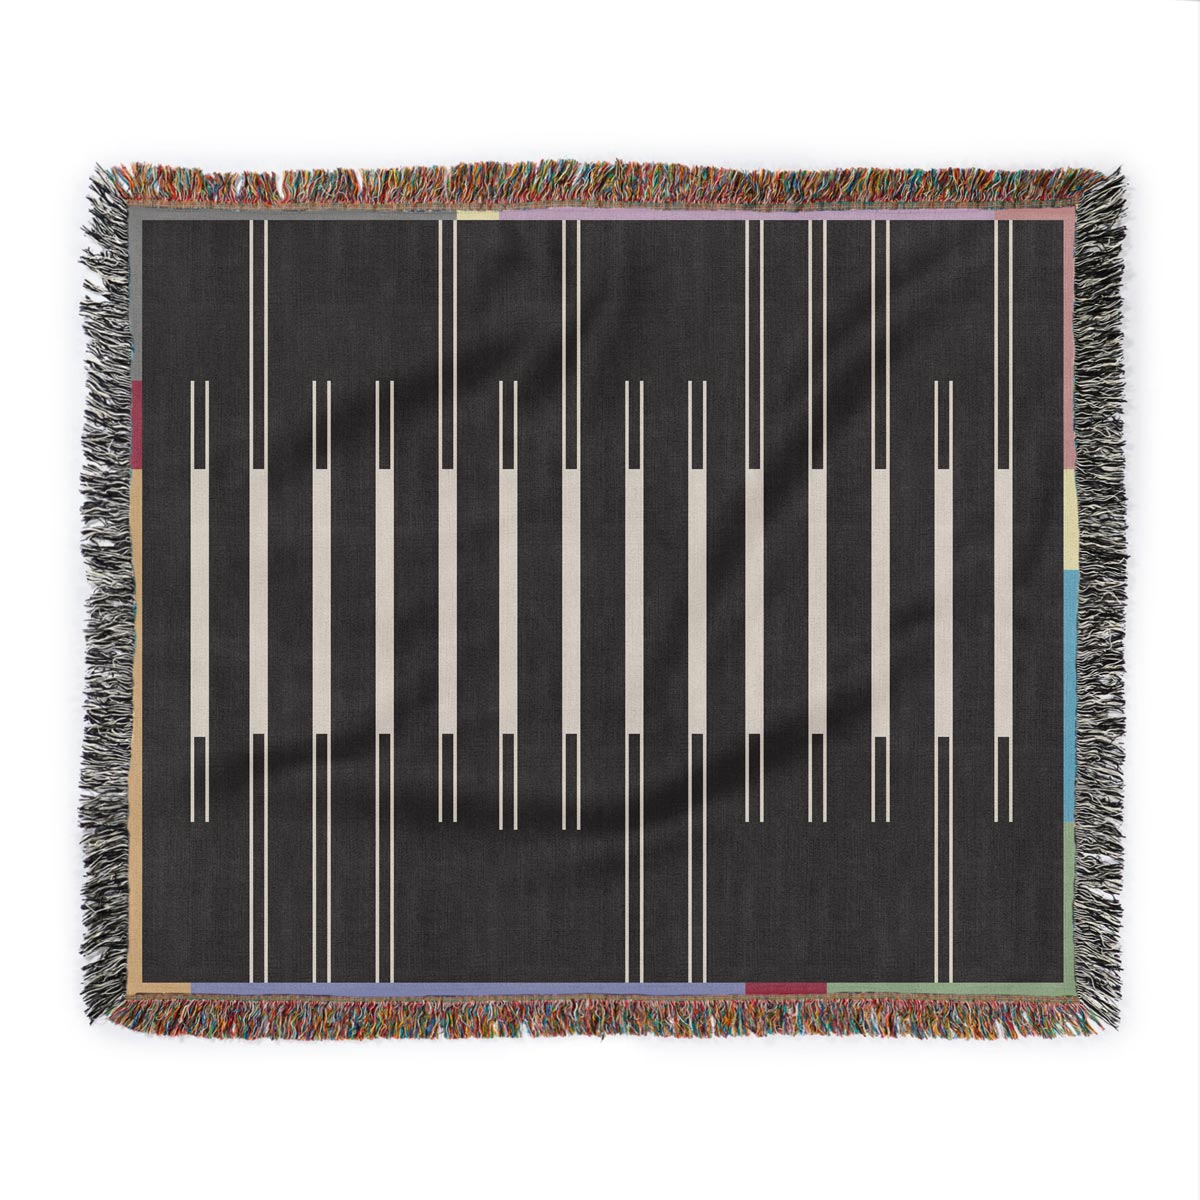 Fula I (dusk) – black & white striped woven blanket with colorful border